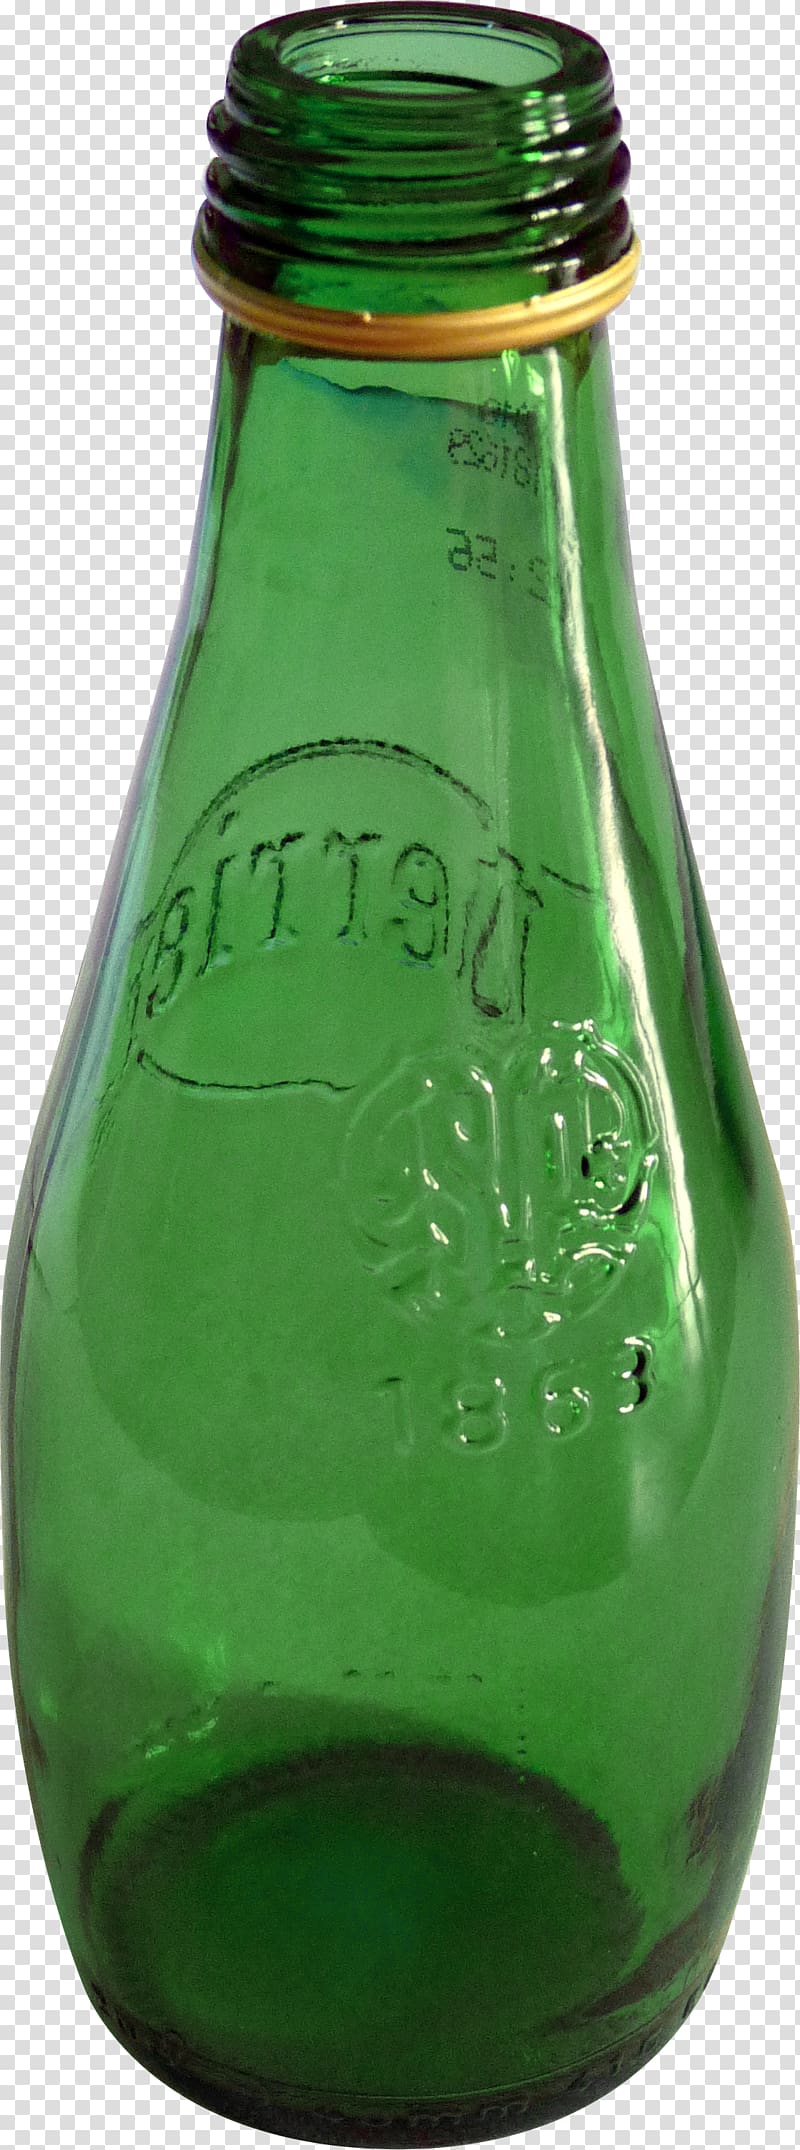 Beer Glass bottle, Green glass bottles transparent background PNG clipart